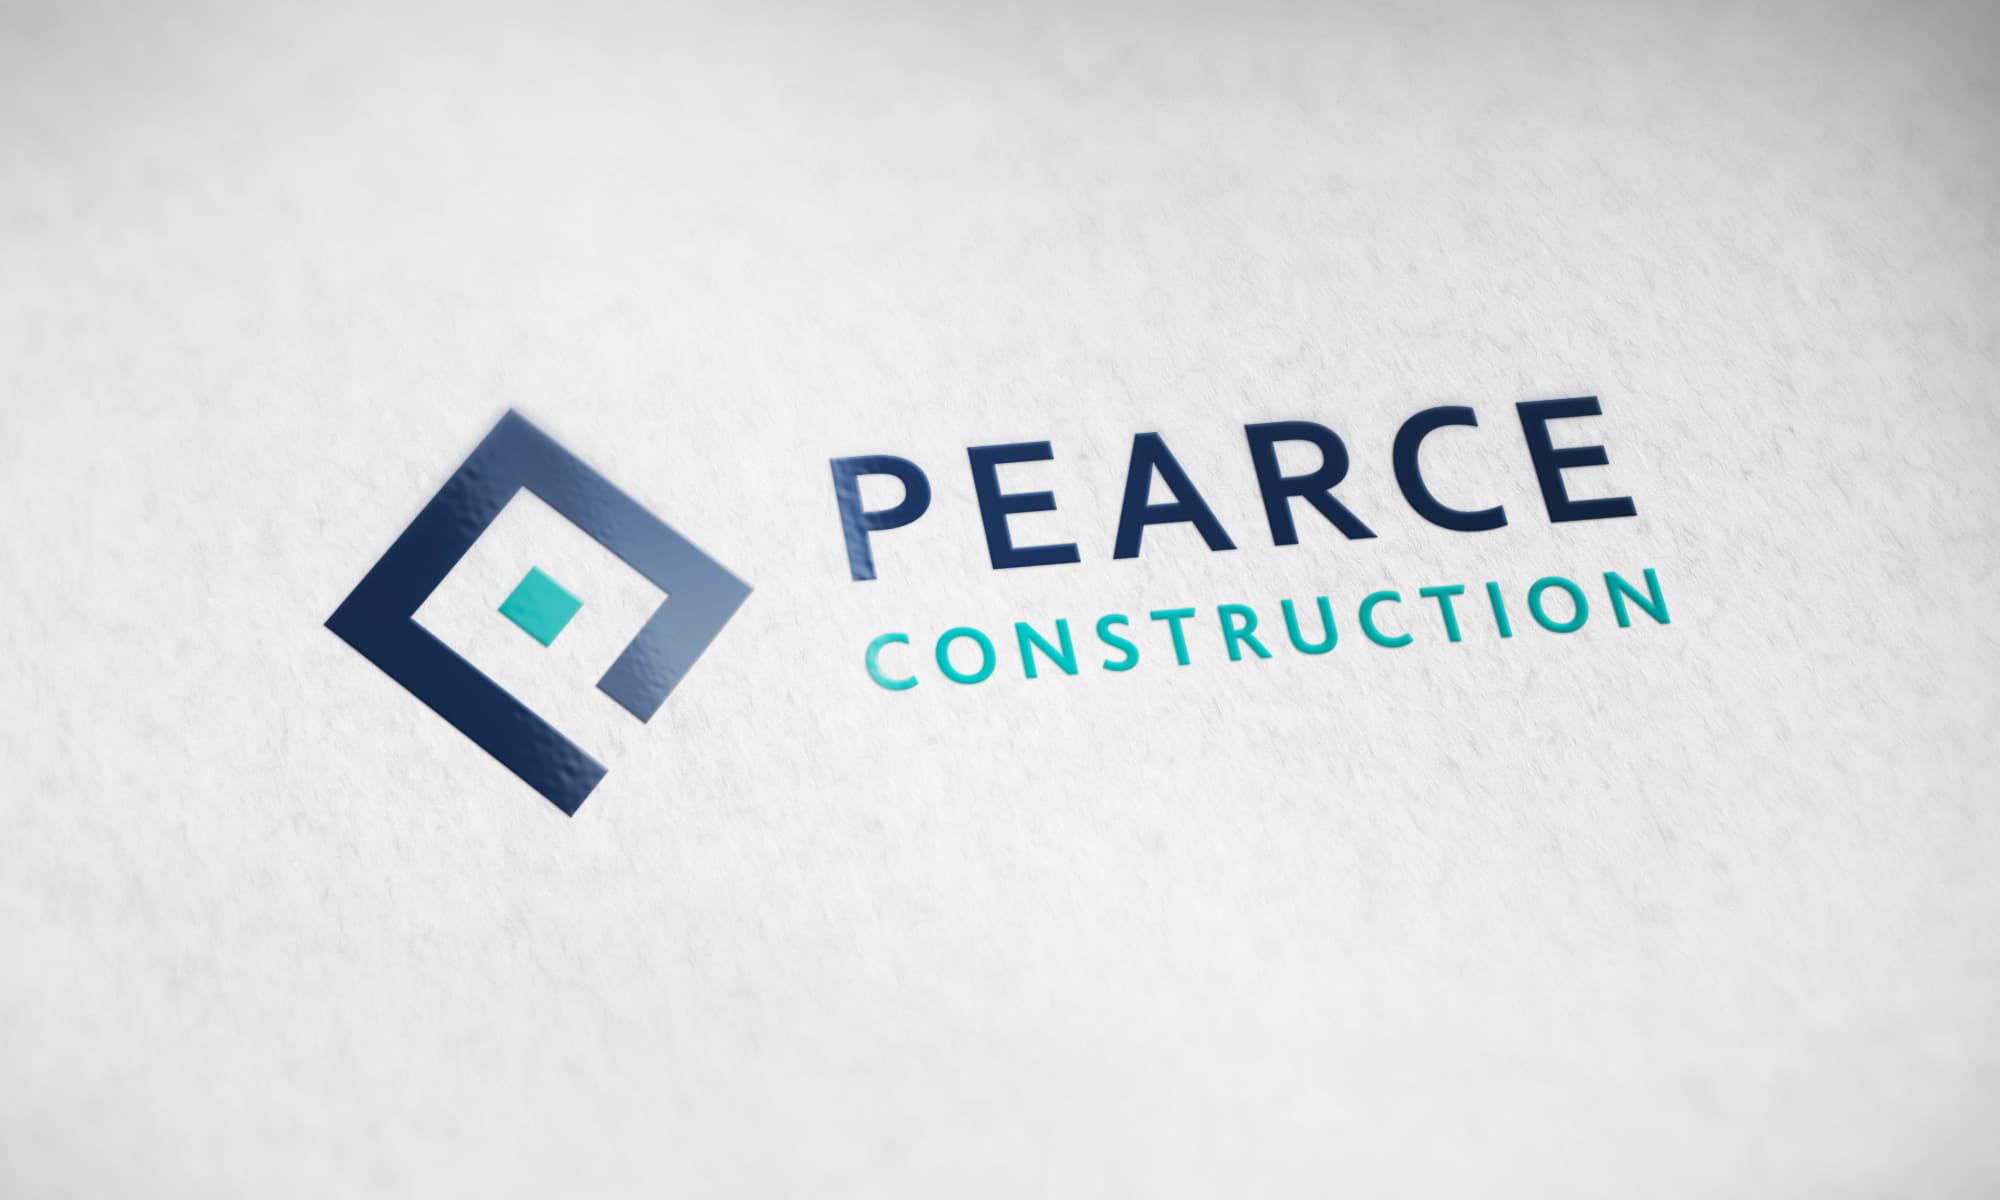 Pearce Construction Branding and New Logo Design